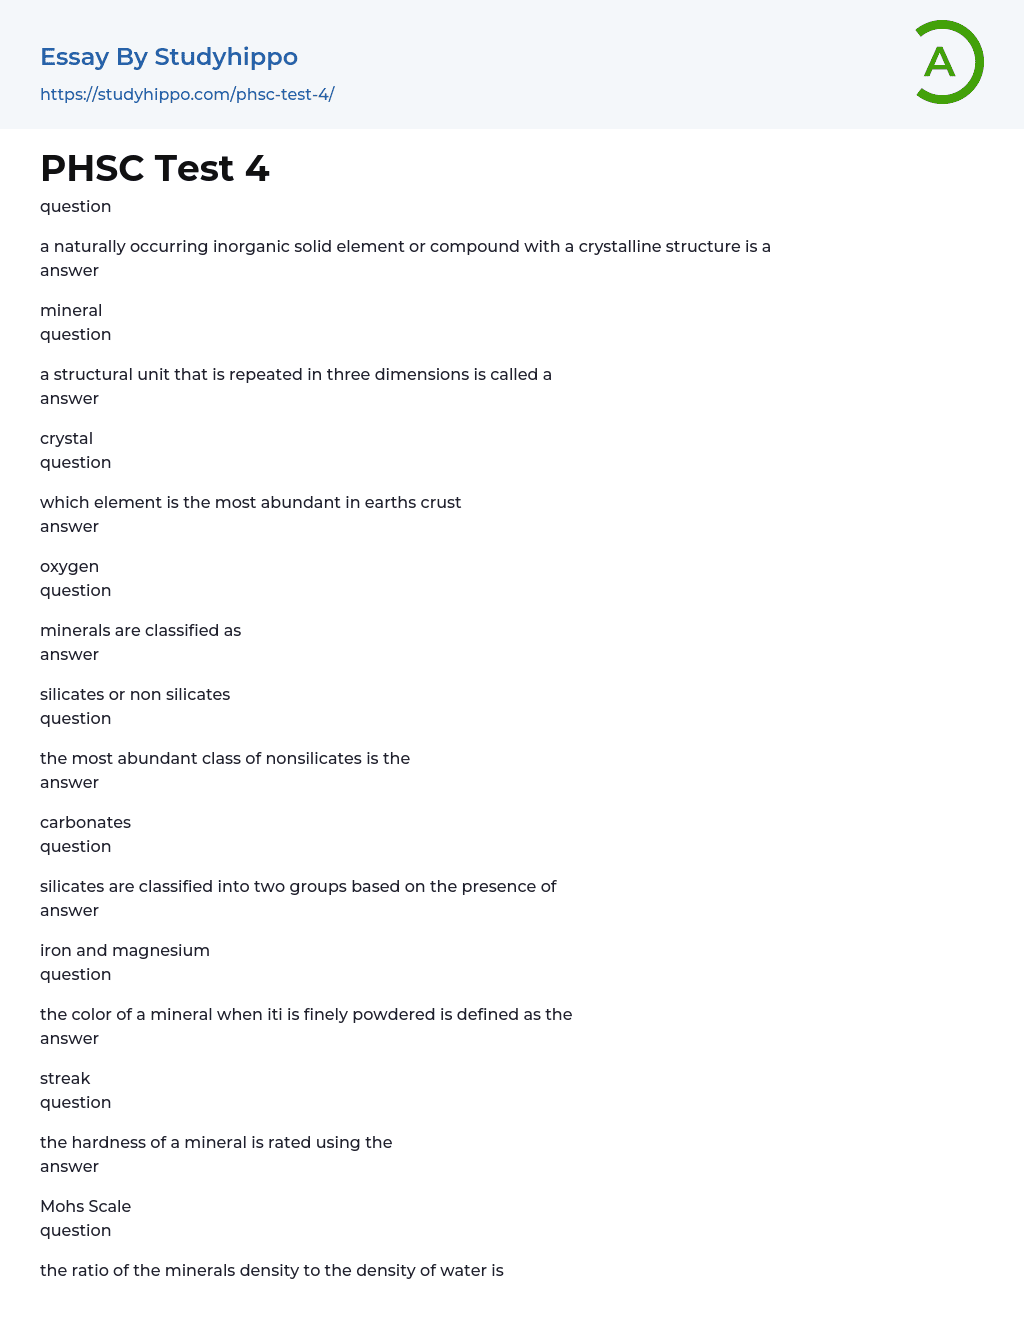 PHSC Test 4 Essay Example